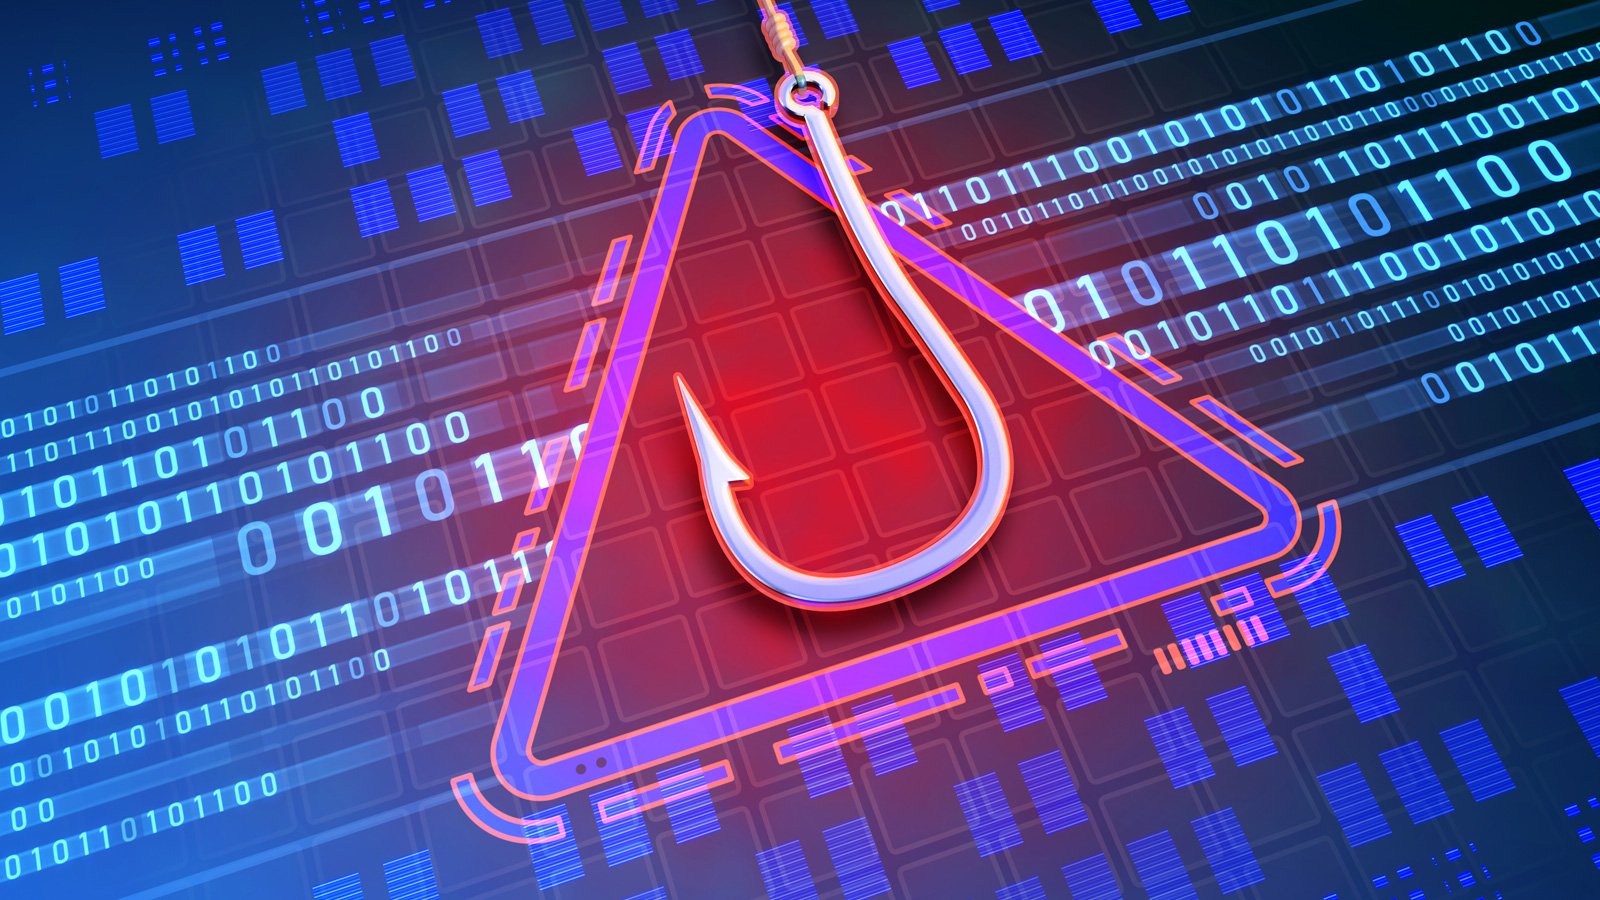 Major U.S. energy org targeted in QR code phishing attack – Source: www.bleepingcomputer.com